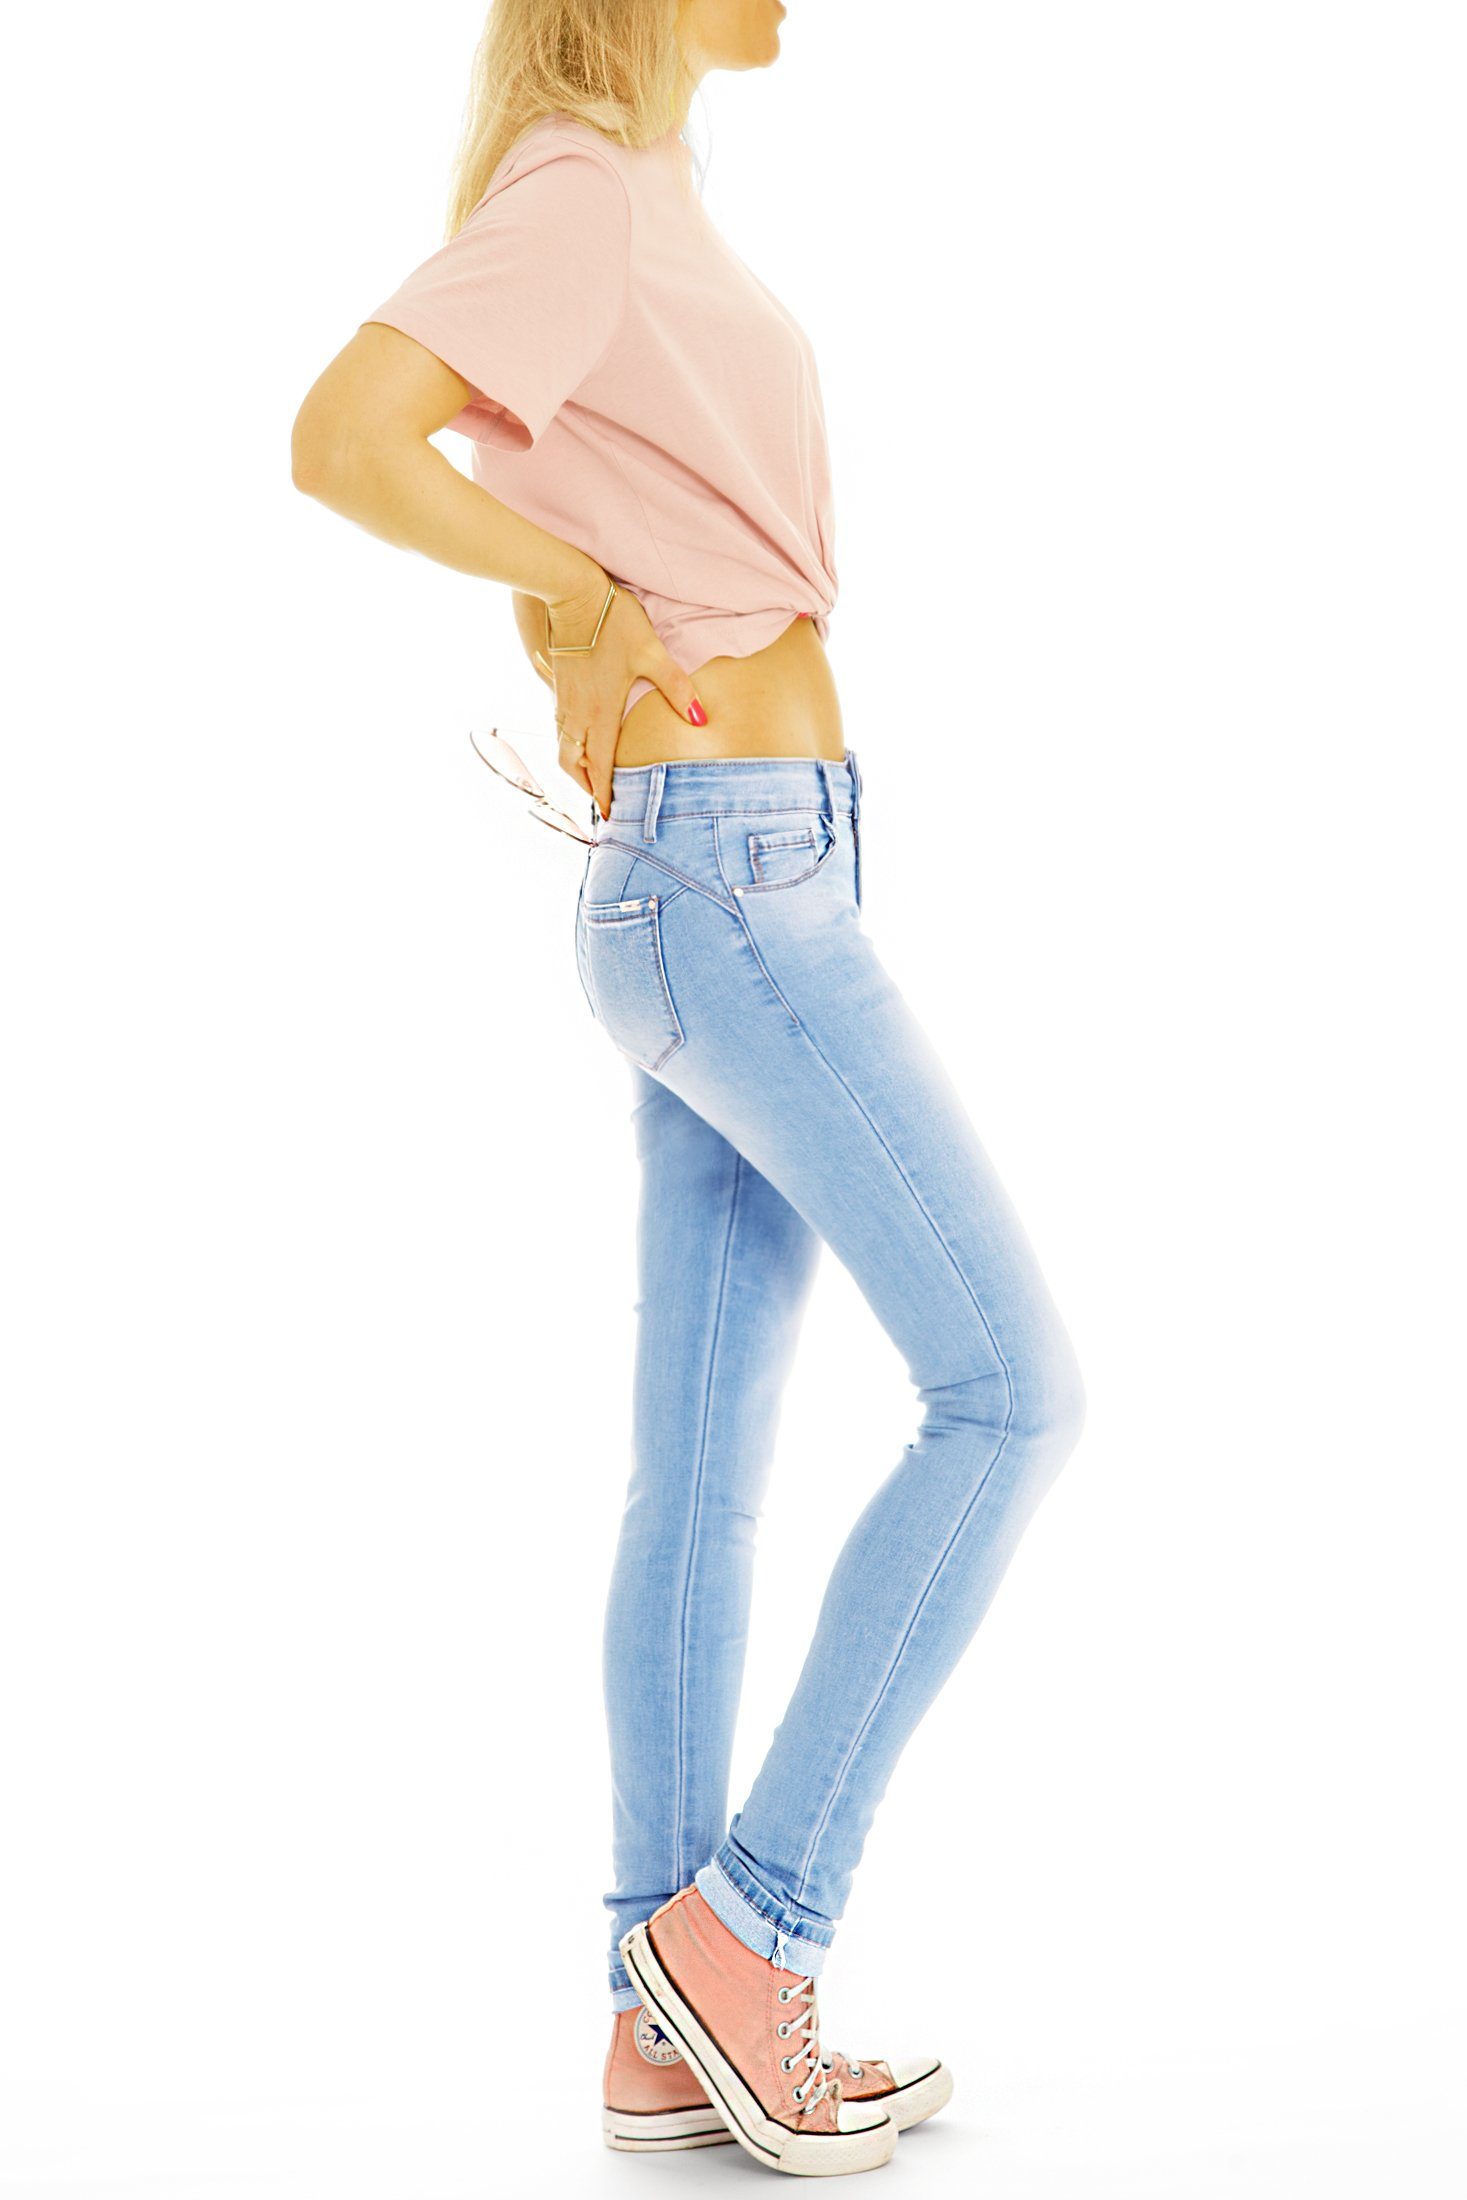 - j36p niedrige dunkelblau Low-rise-Jeans 5-Pocket-Style Rise - Leibhöhe Hose mit Low Stretch-Anteil, Jeans styled Hüftjeans be Damen